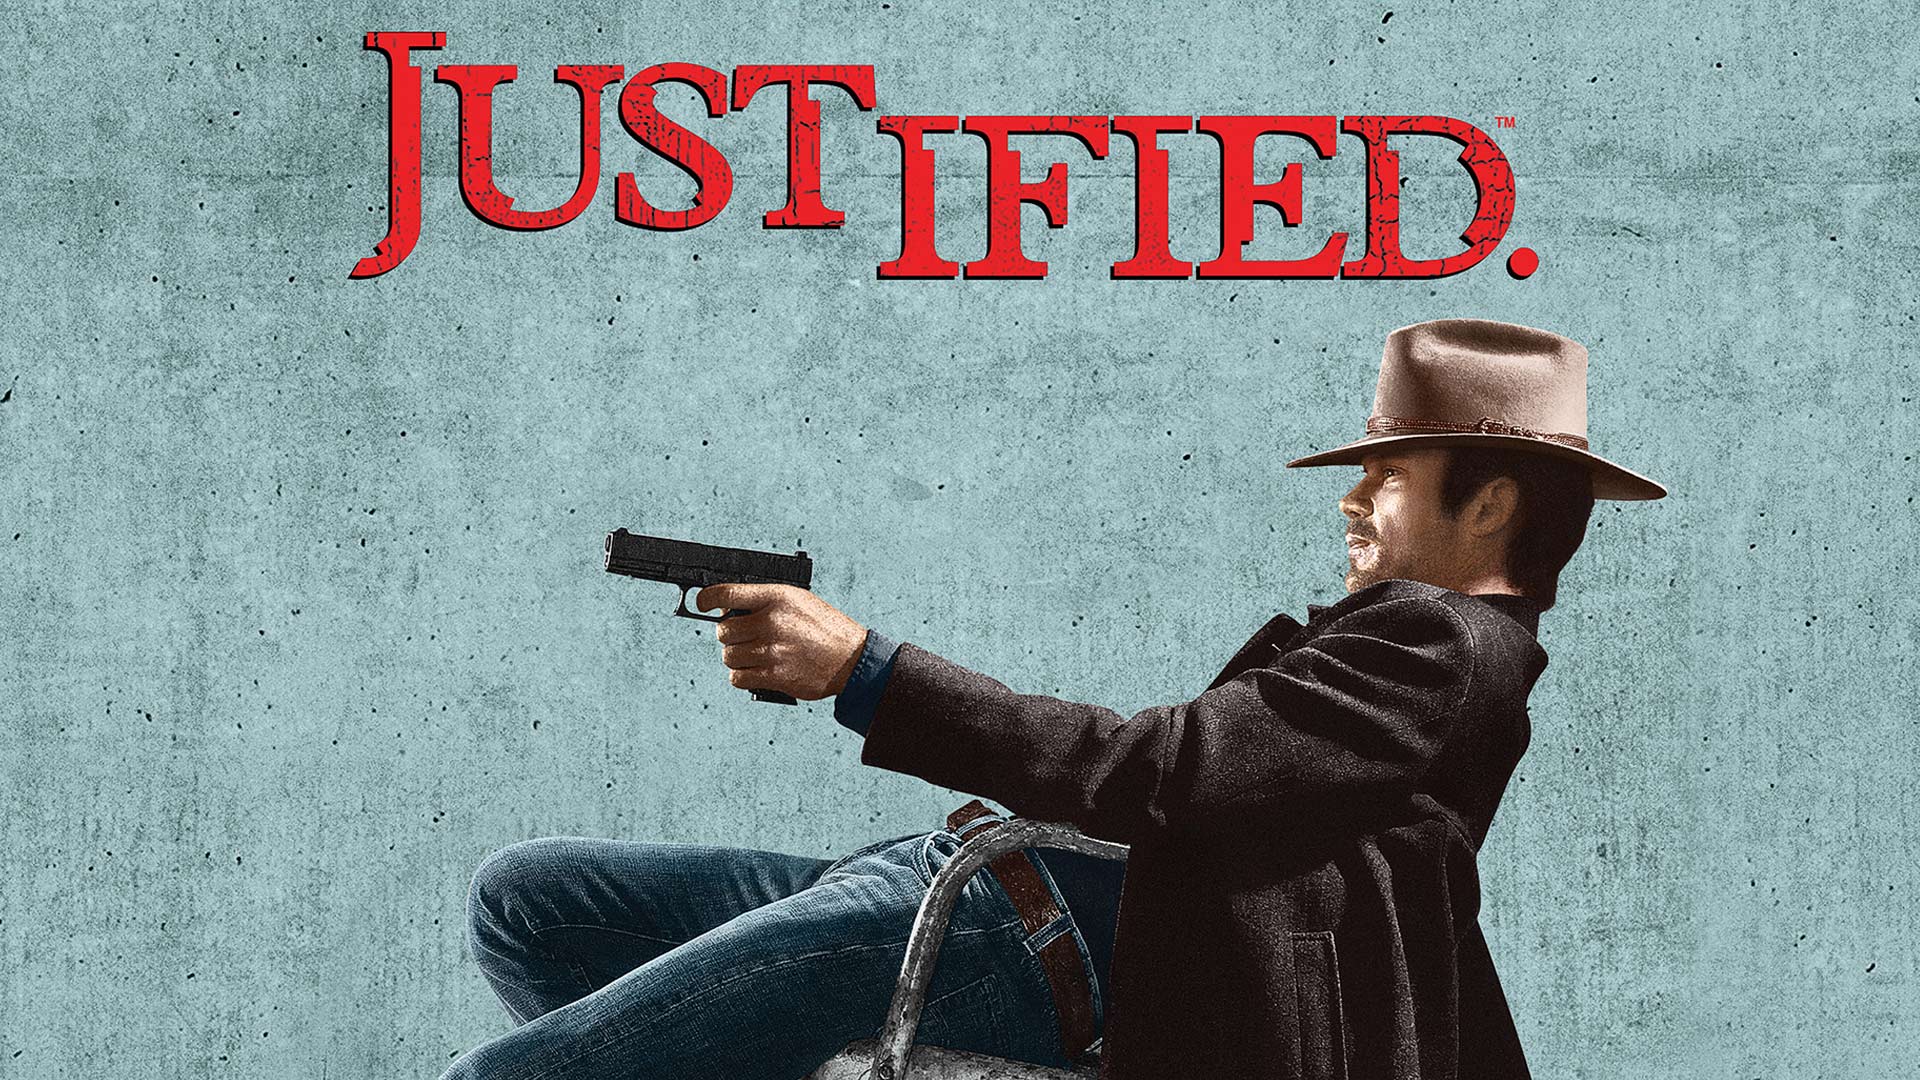 Justified Temporada 3 Amzn 1080p WEB-DL